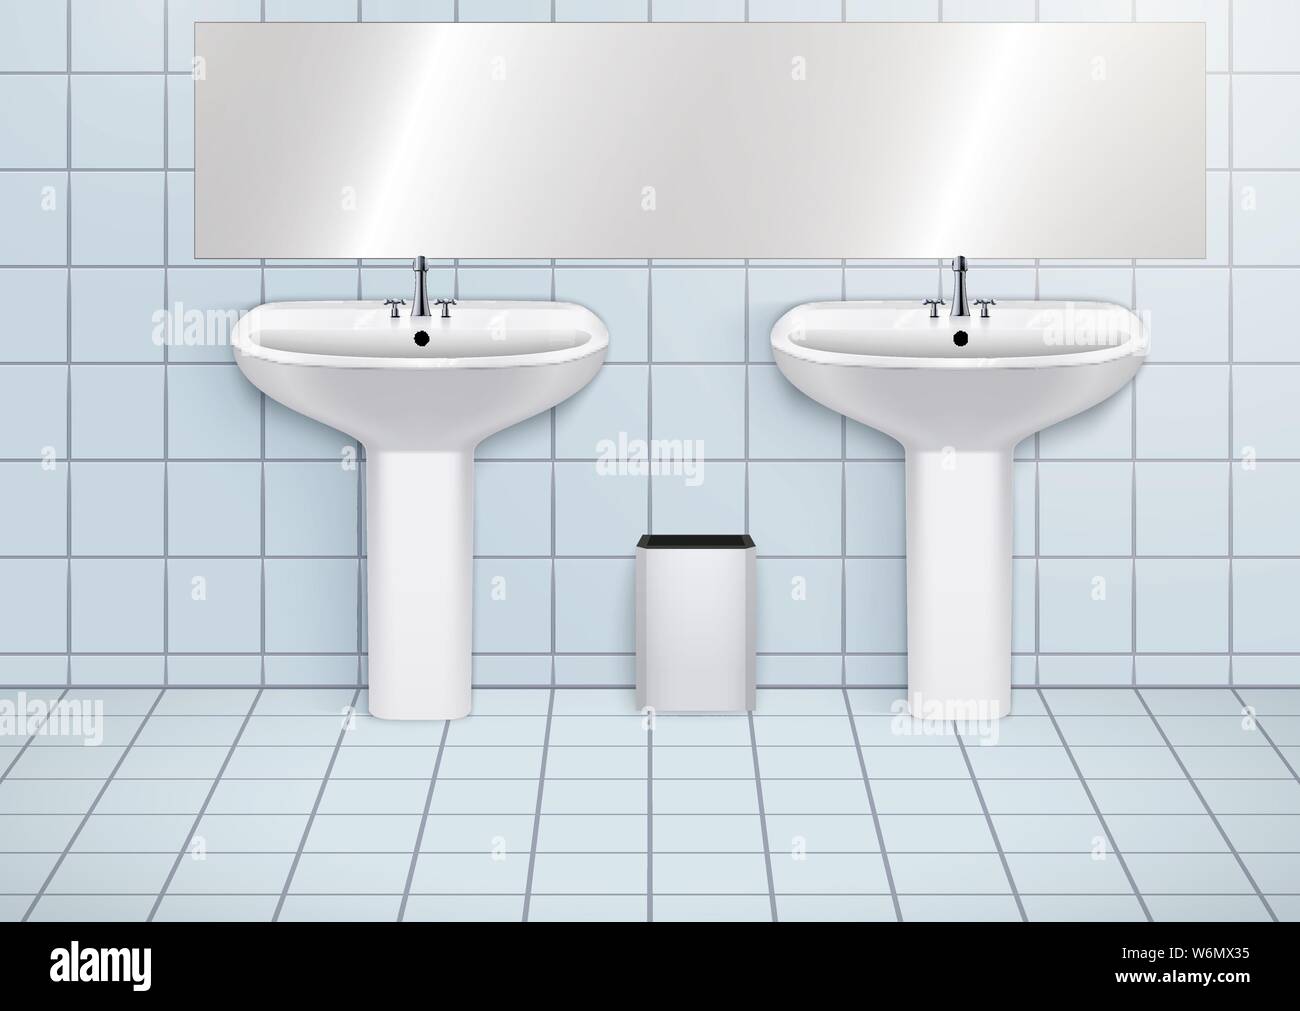 WC washroom with washbasins Stock Vector